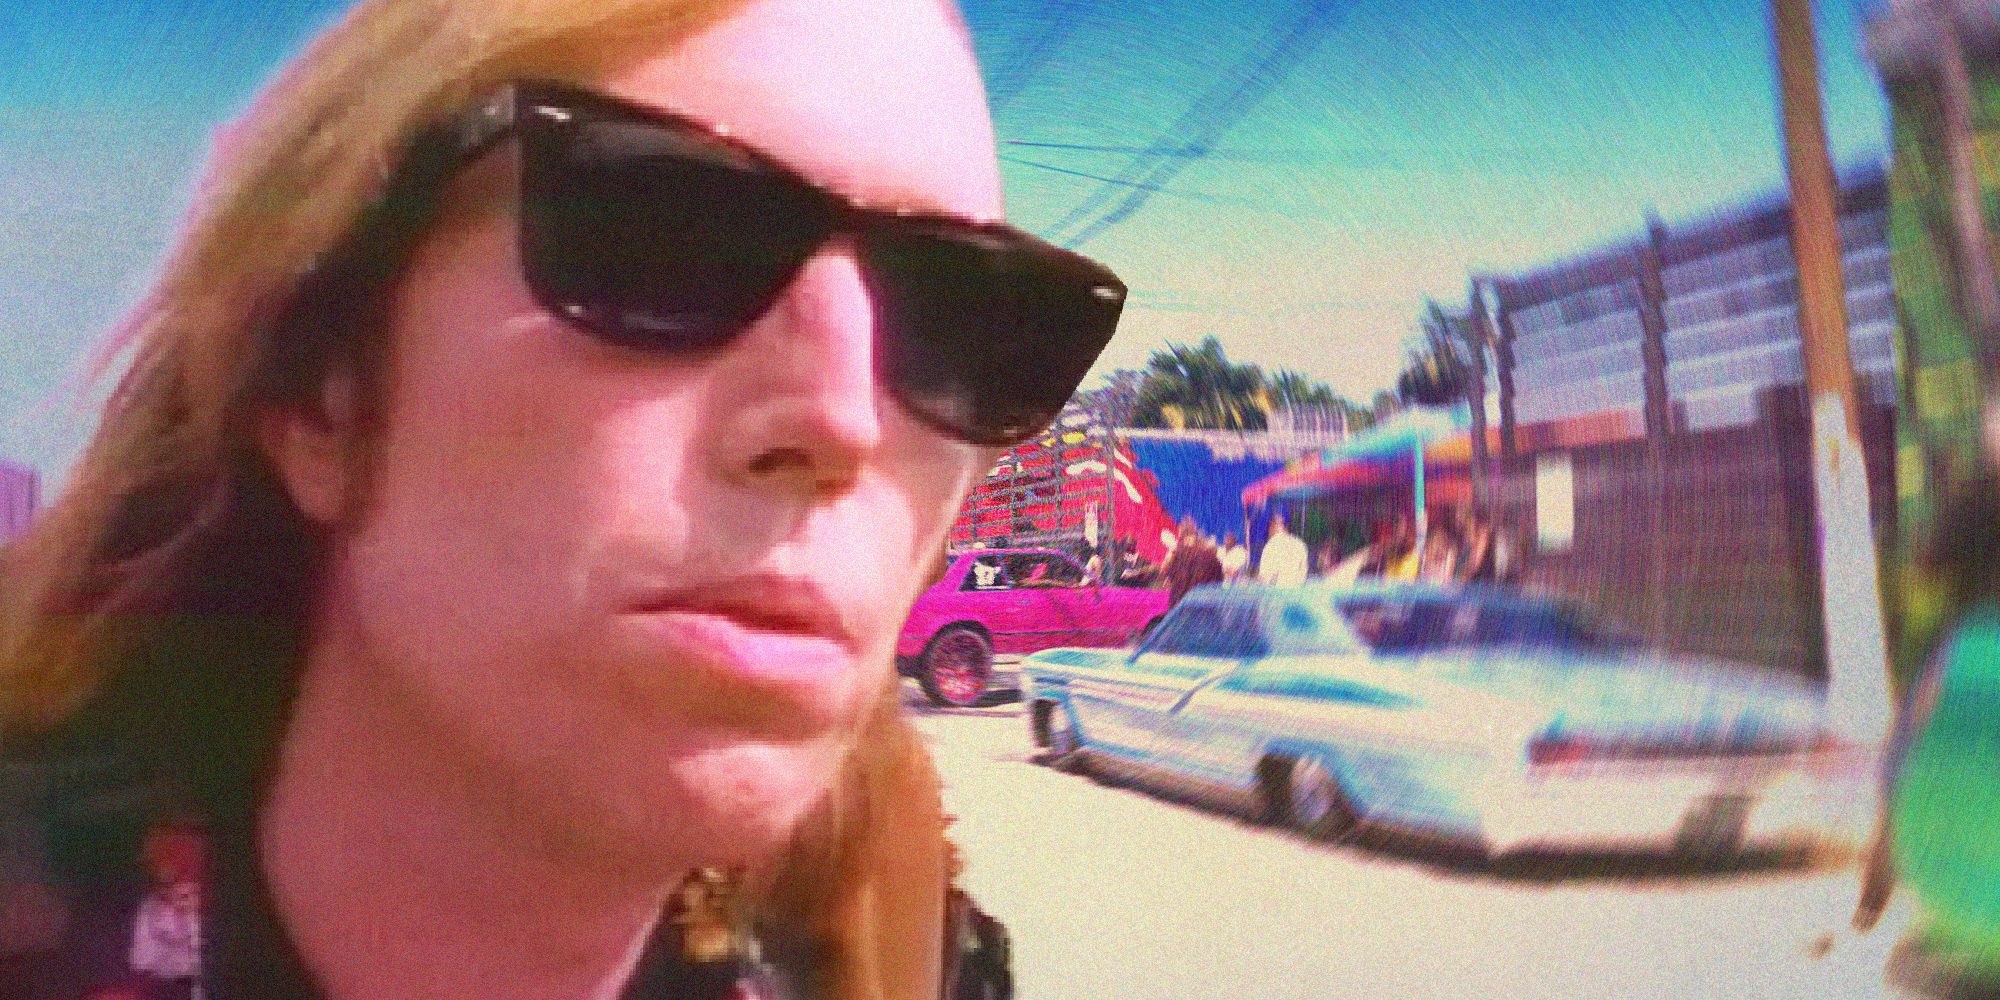 Tom Petty from the Free Fallin video in GTA 6